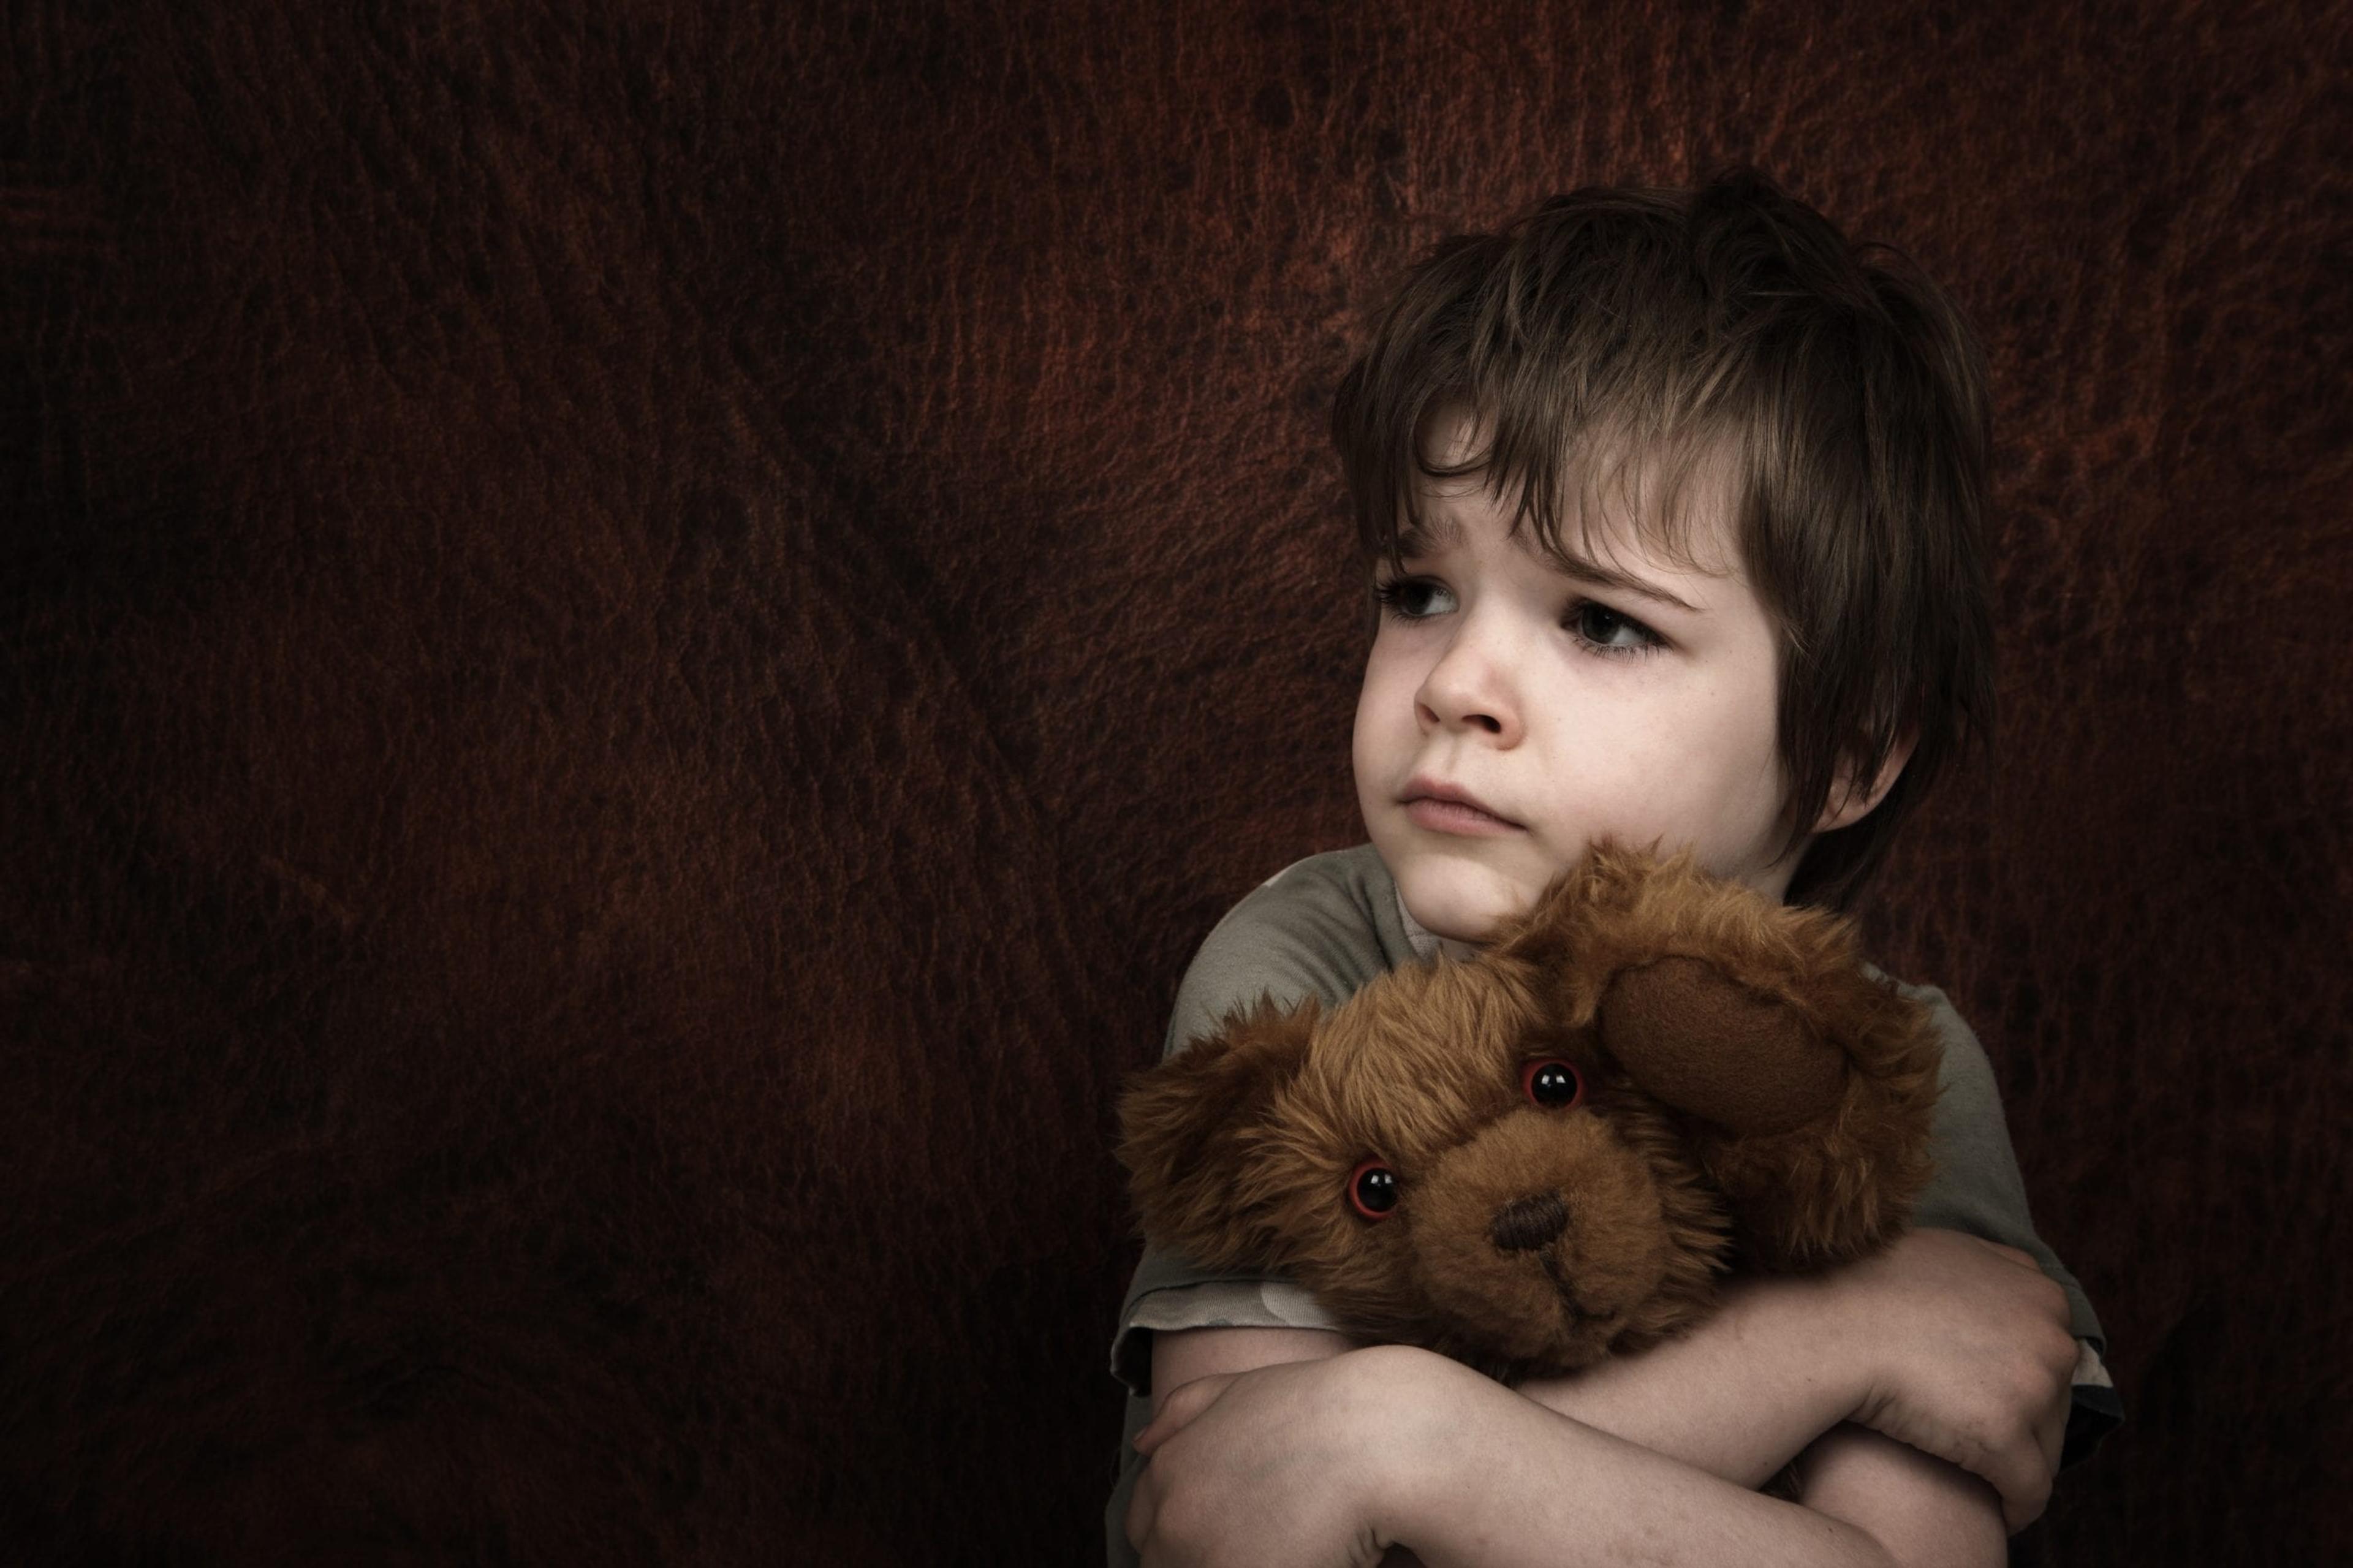 Worried child holdinig a teddy bear